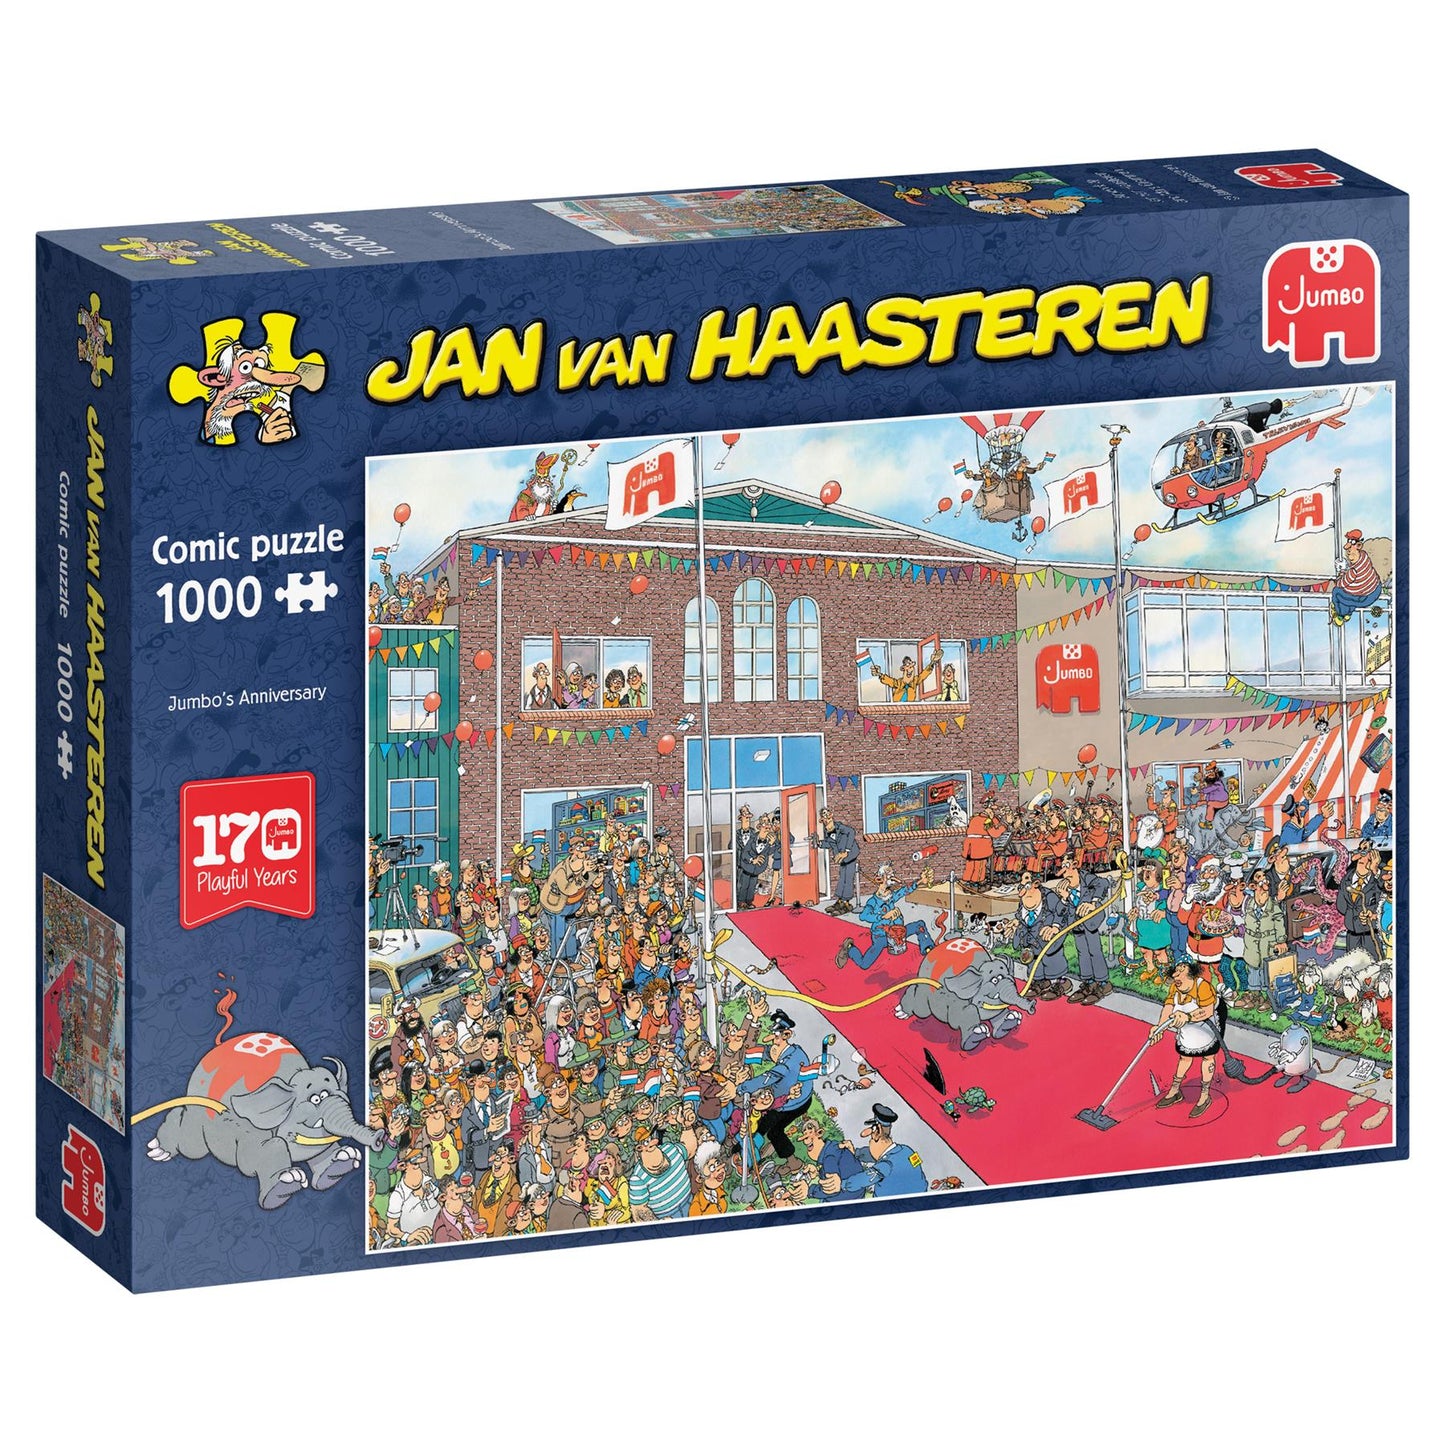 Jan Van Haasteren Jumbo's 170th Anniversary 1000 Piece Jigsaw Puzzle